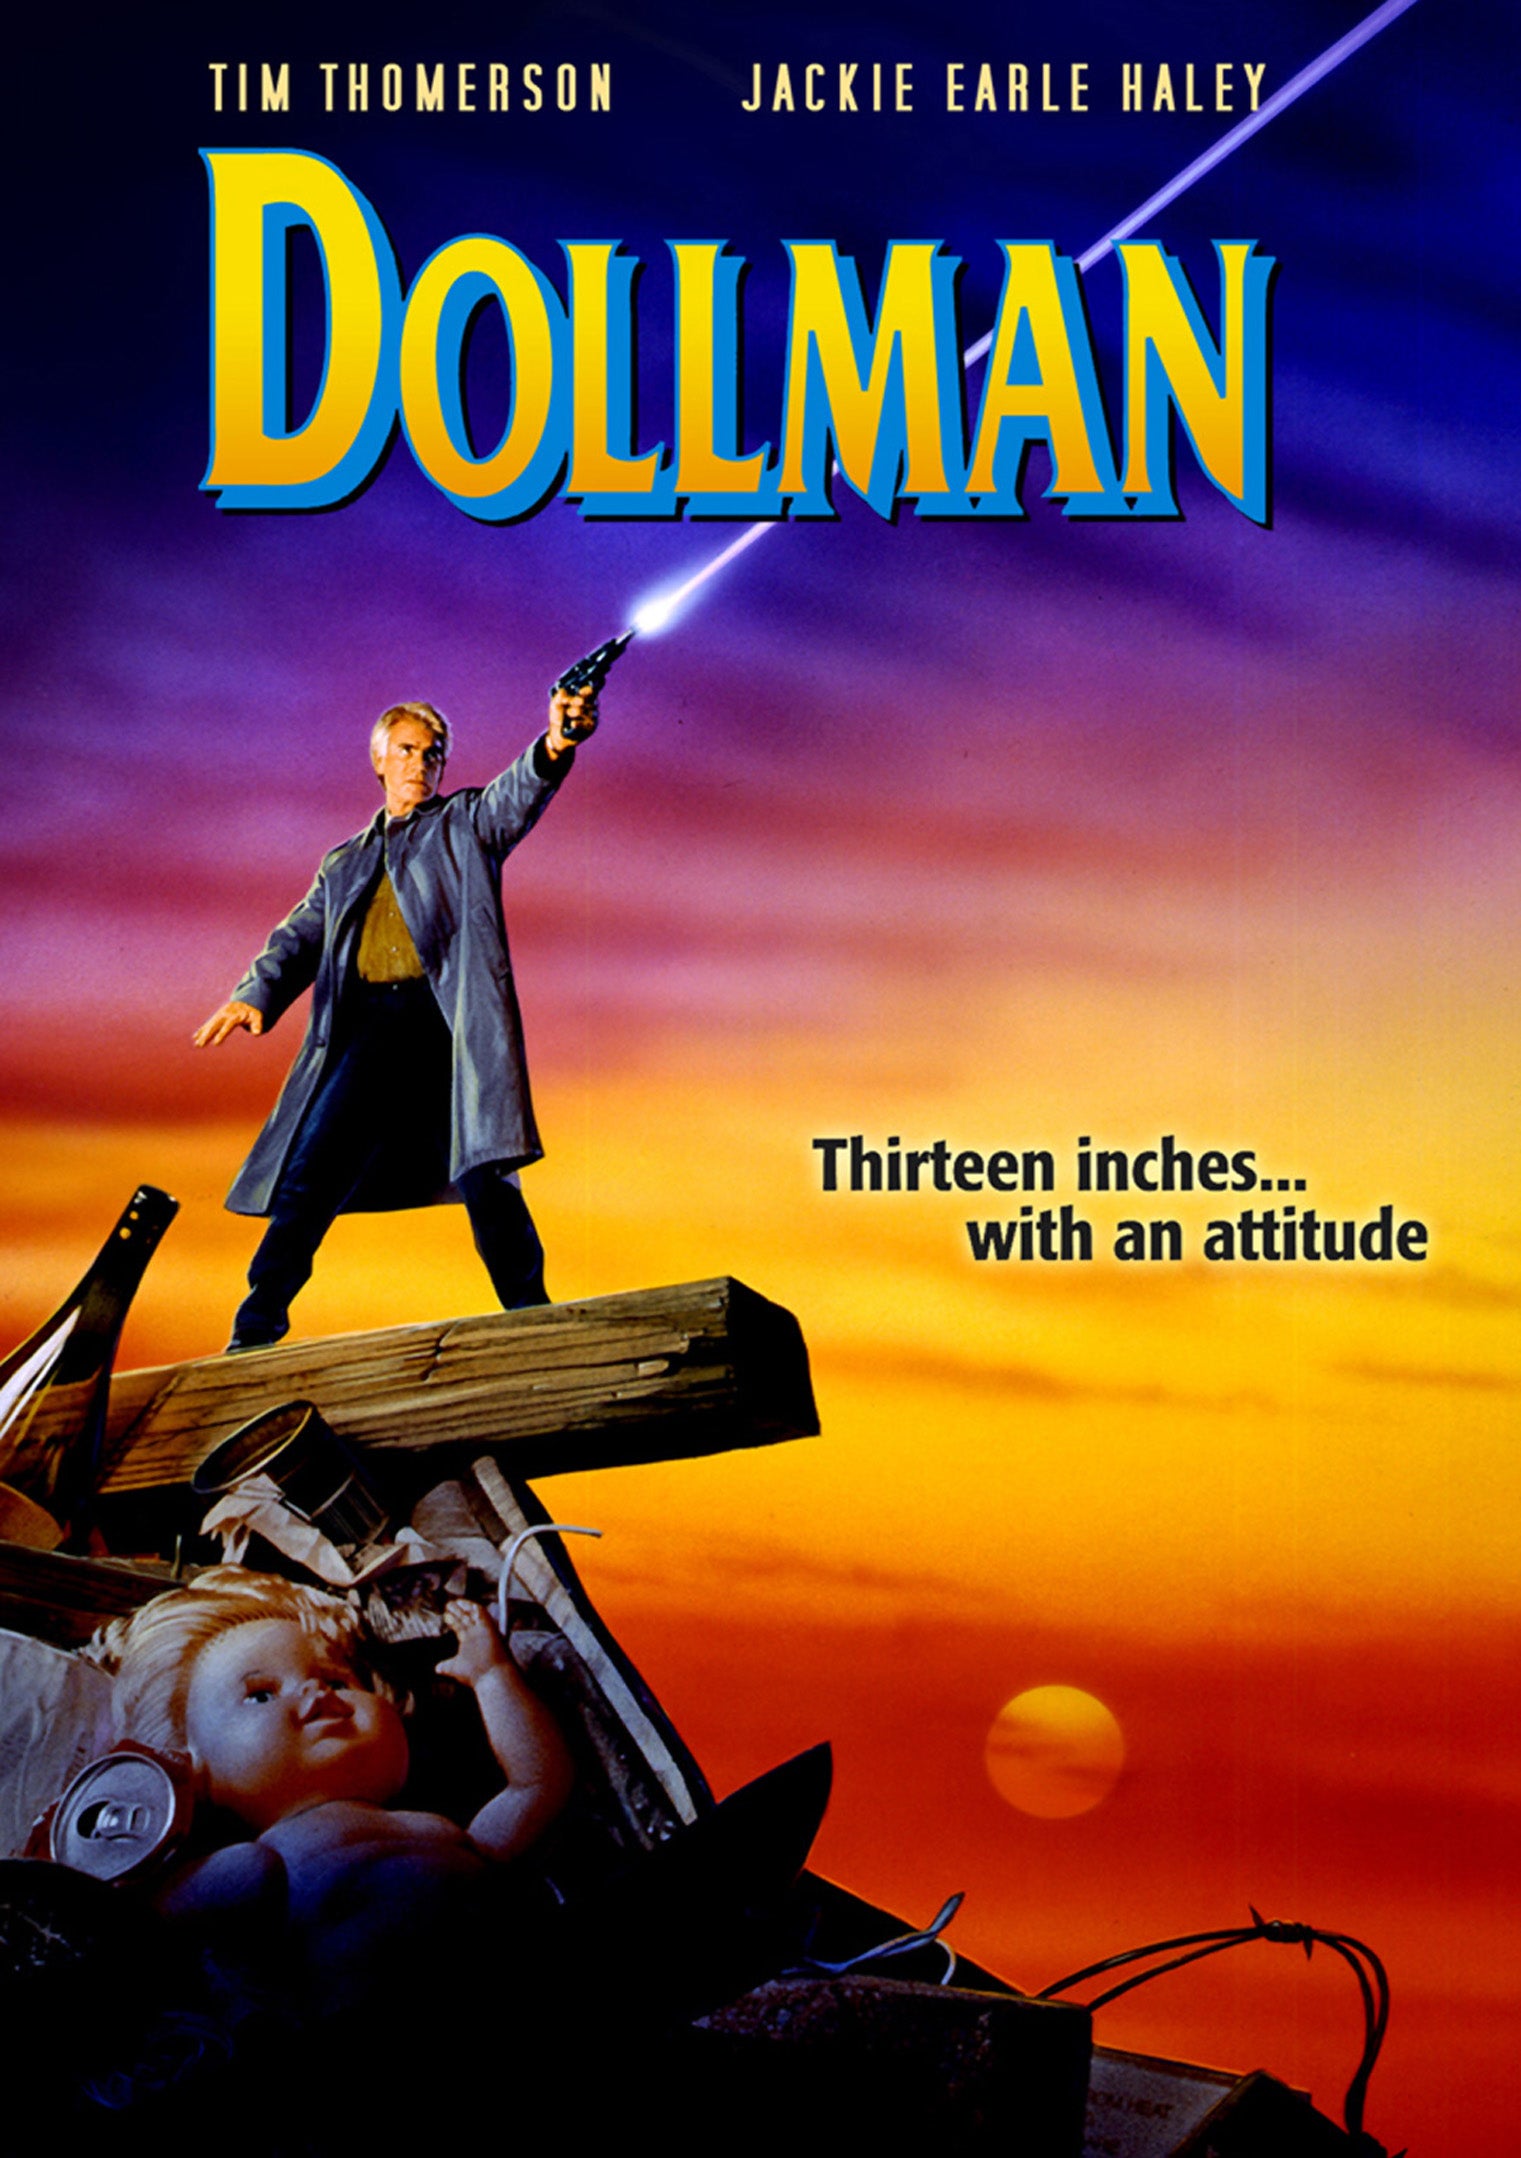 DOLLMAN DVD